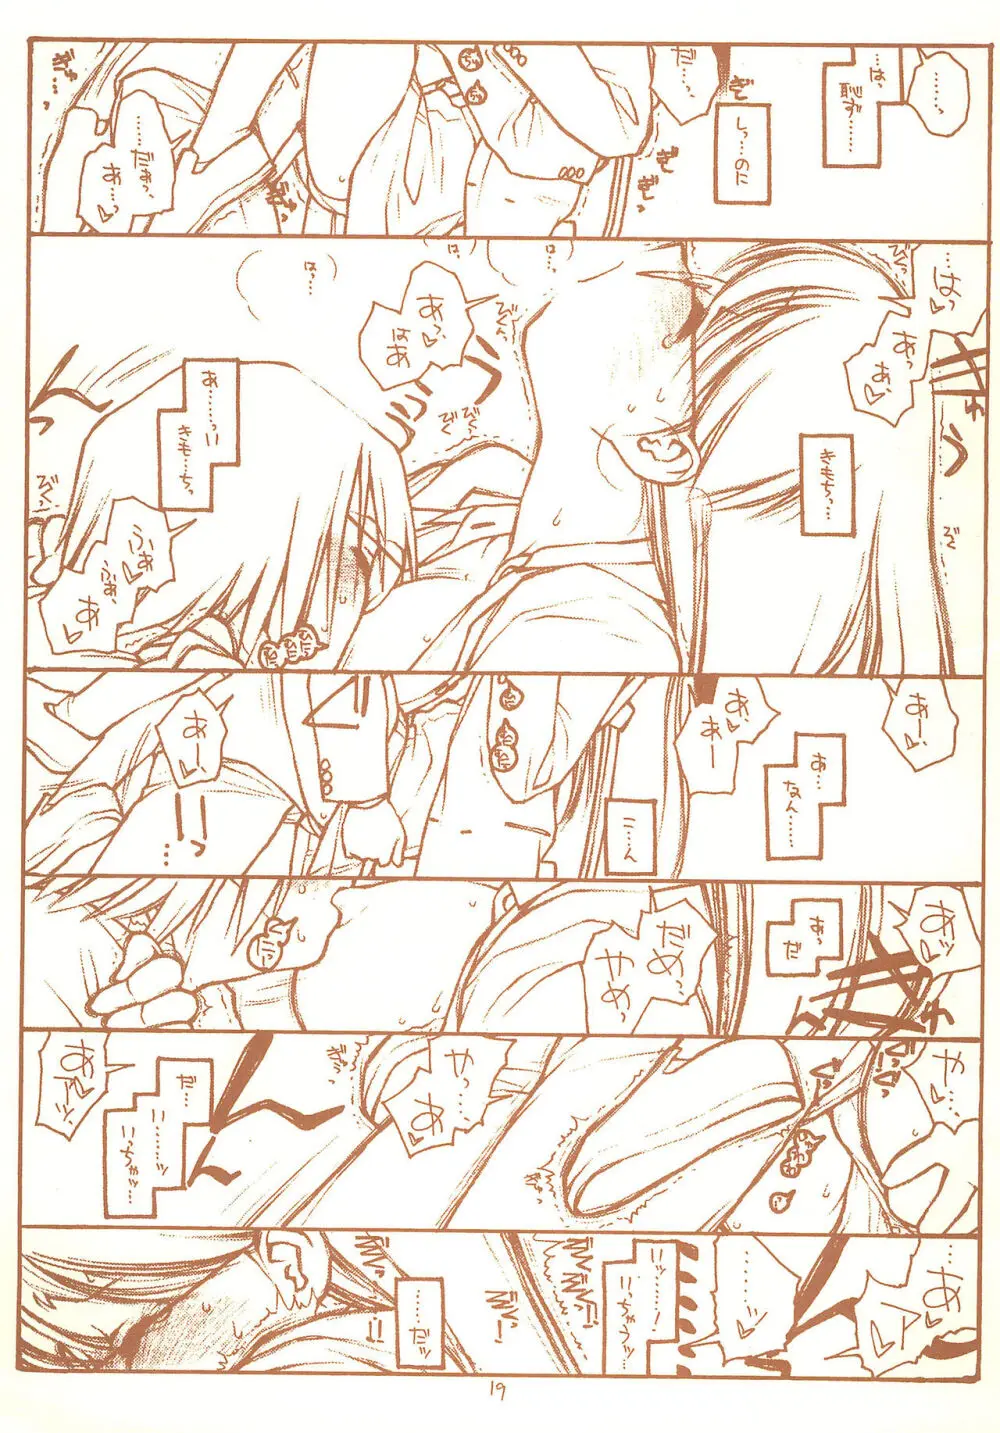 SATOHSAN+YAMADAKUN1 RANGE 1.01 A STEREORANGE PRODUCT 19ページ